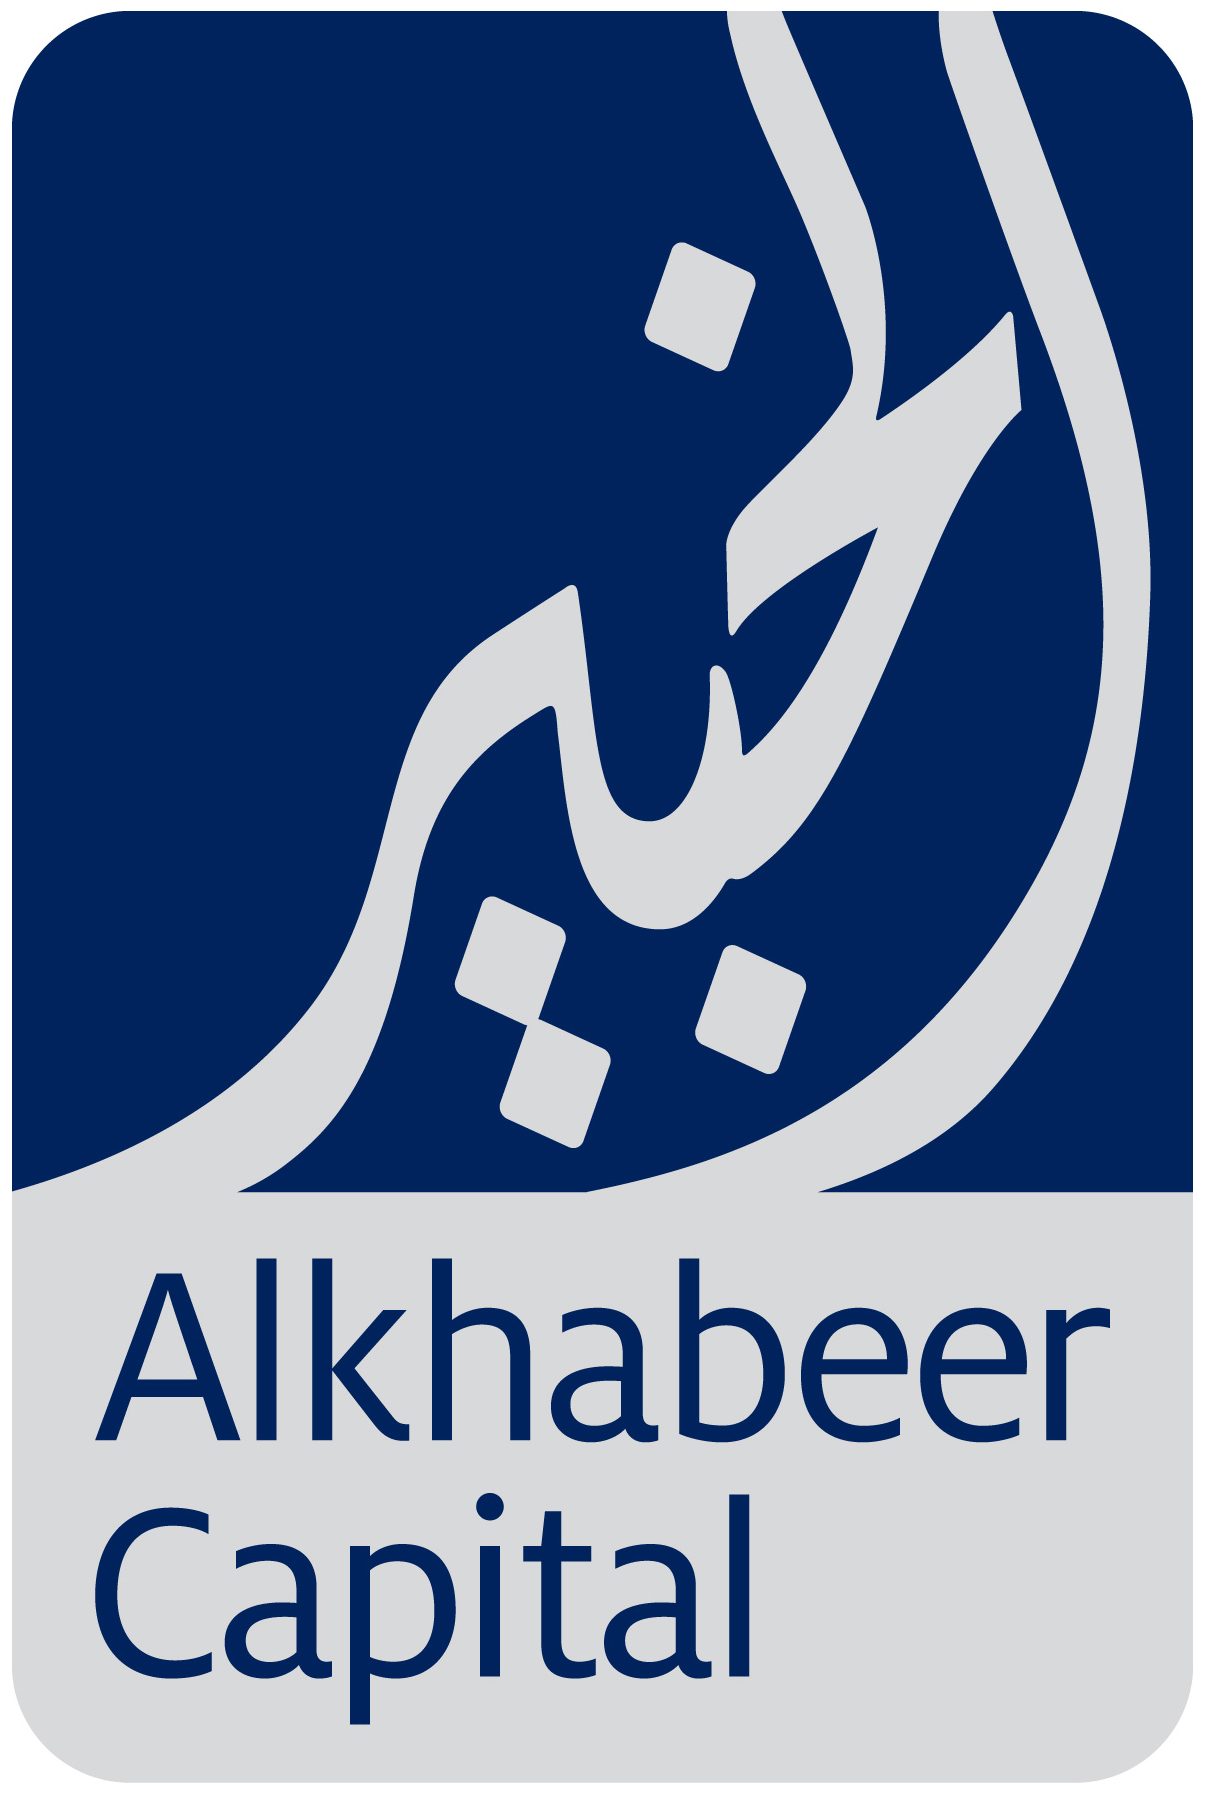 alkhabeer capital